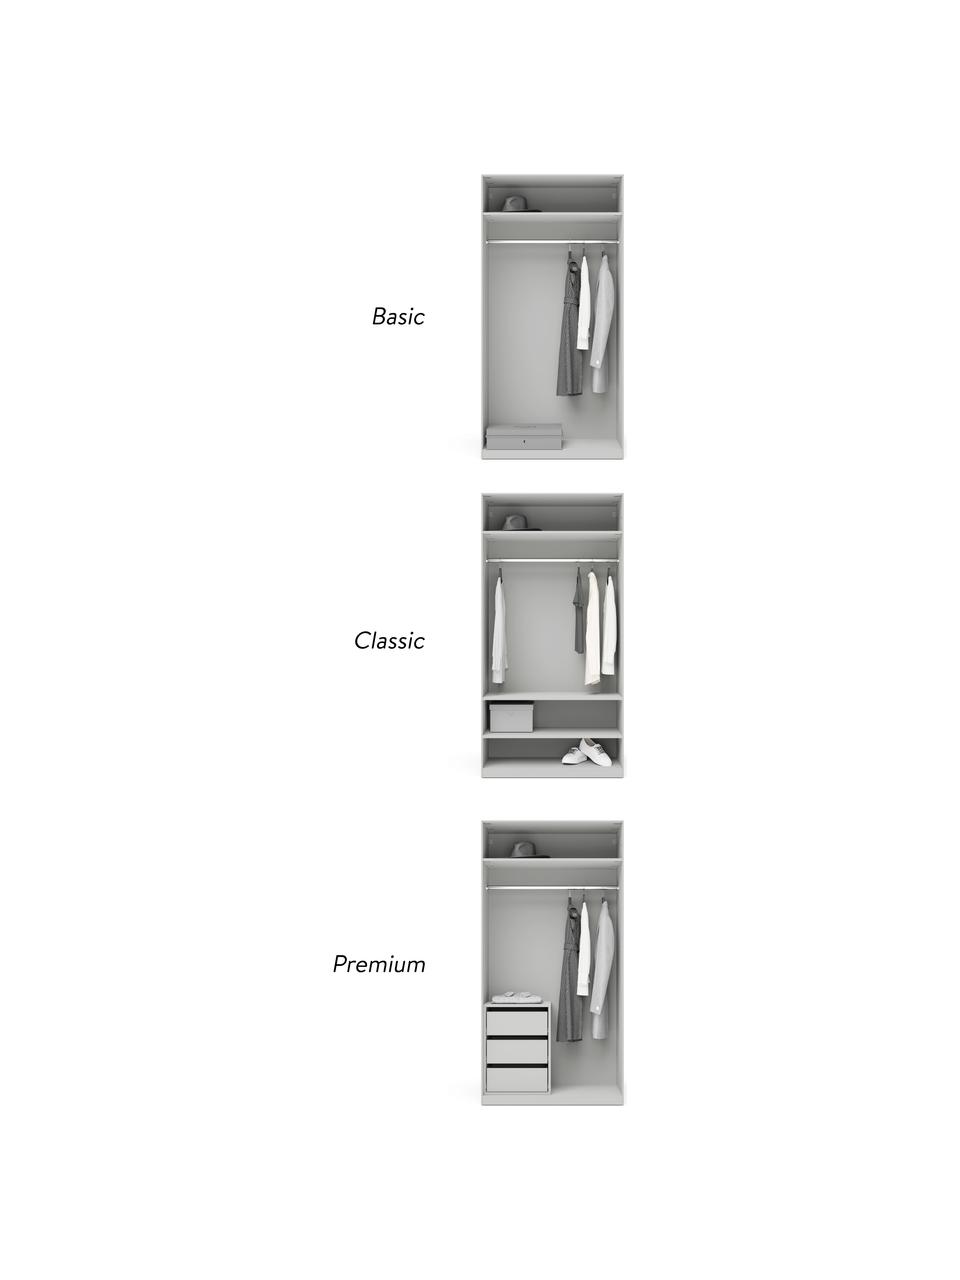 Modulární skříň s otočnými dveřmi Charlotte, šířka 100 cm, více variant, Šedá, Interiér Basic, Š 100 x V 200 cm